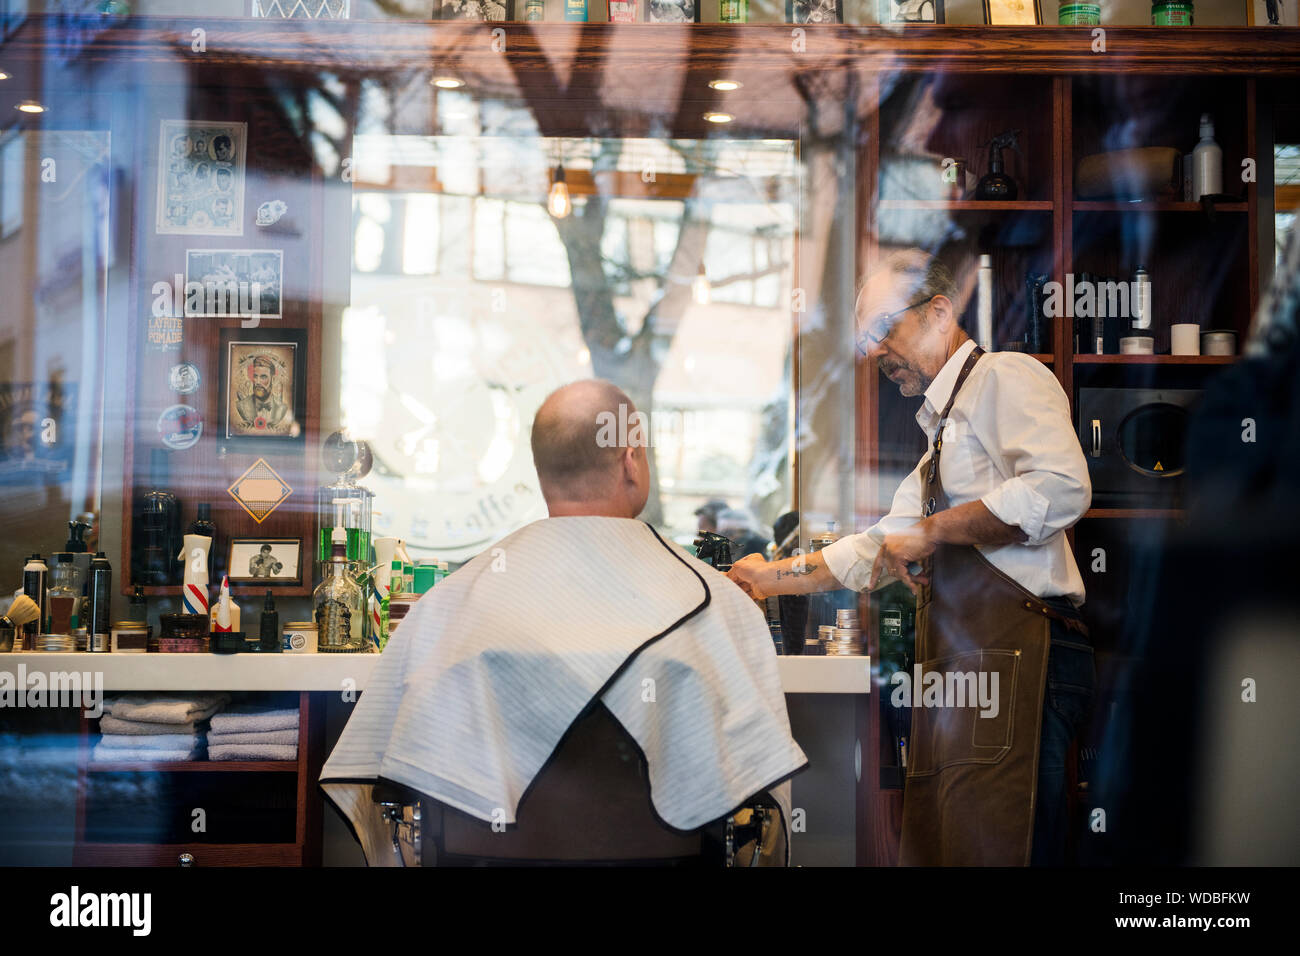 Ventana de barbería fotografías e imágenes de alta resolución - Alamy